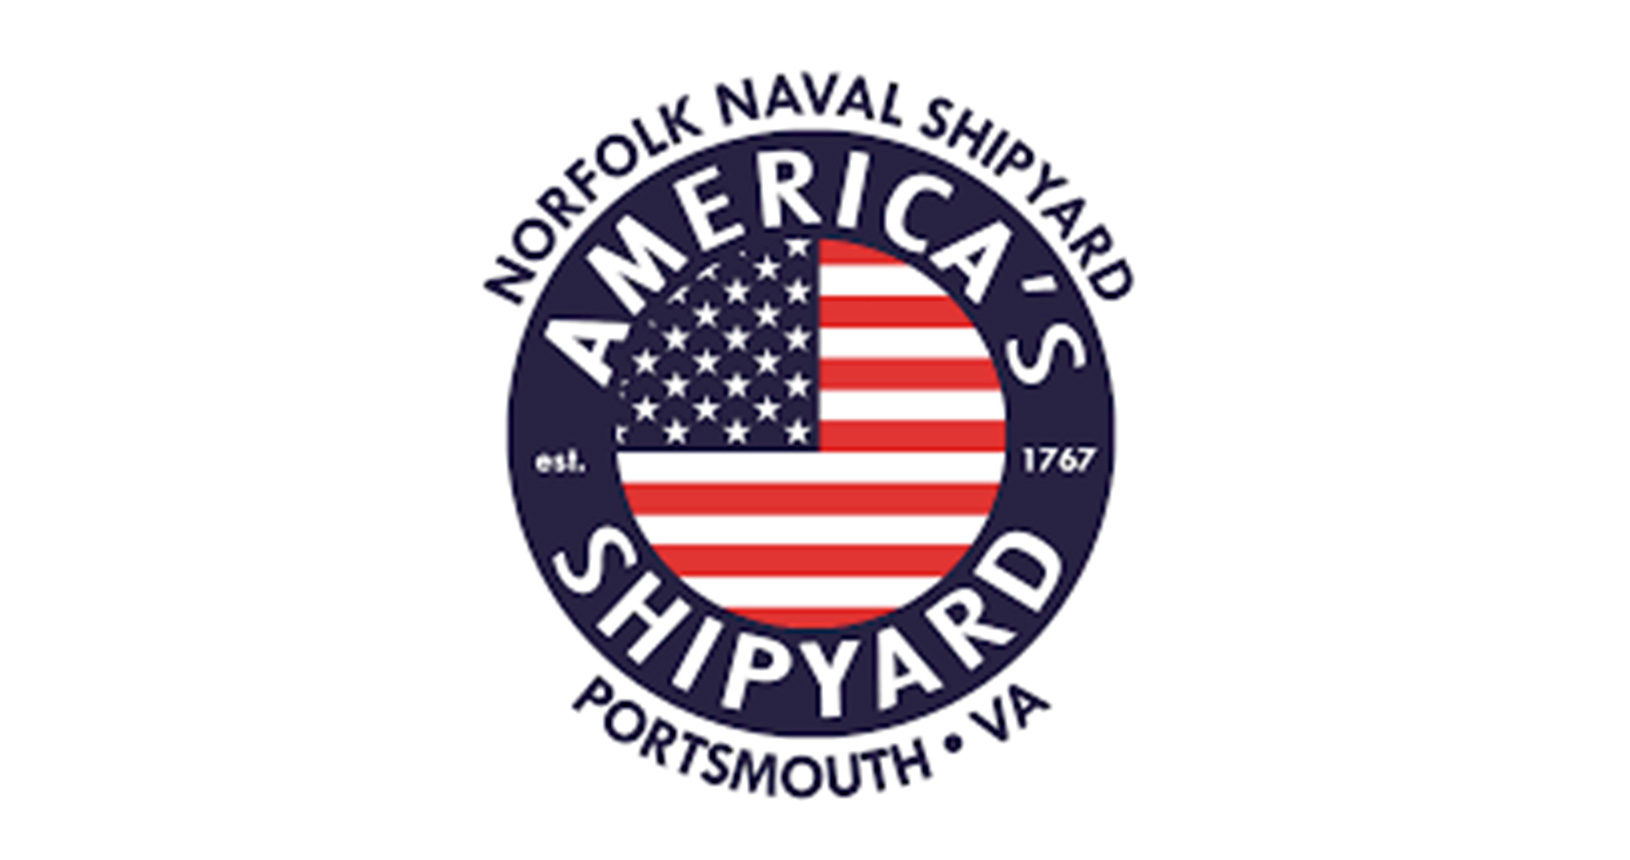 Norfolk Naval Shipyard Logo